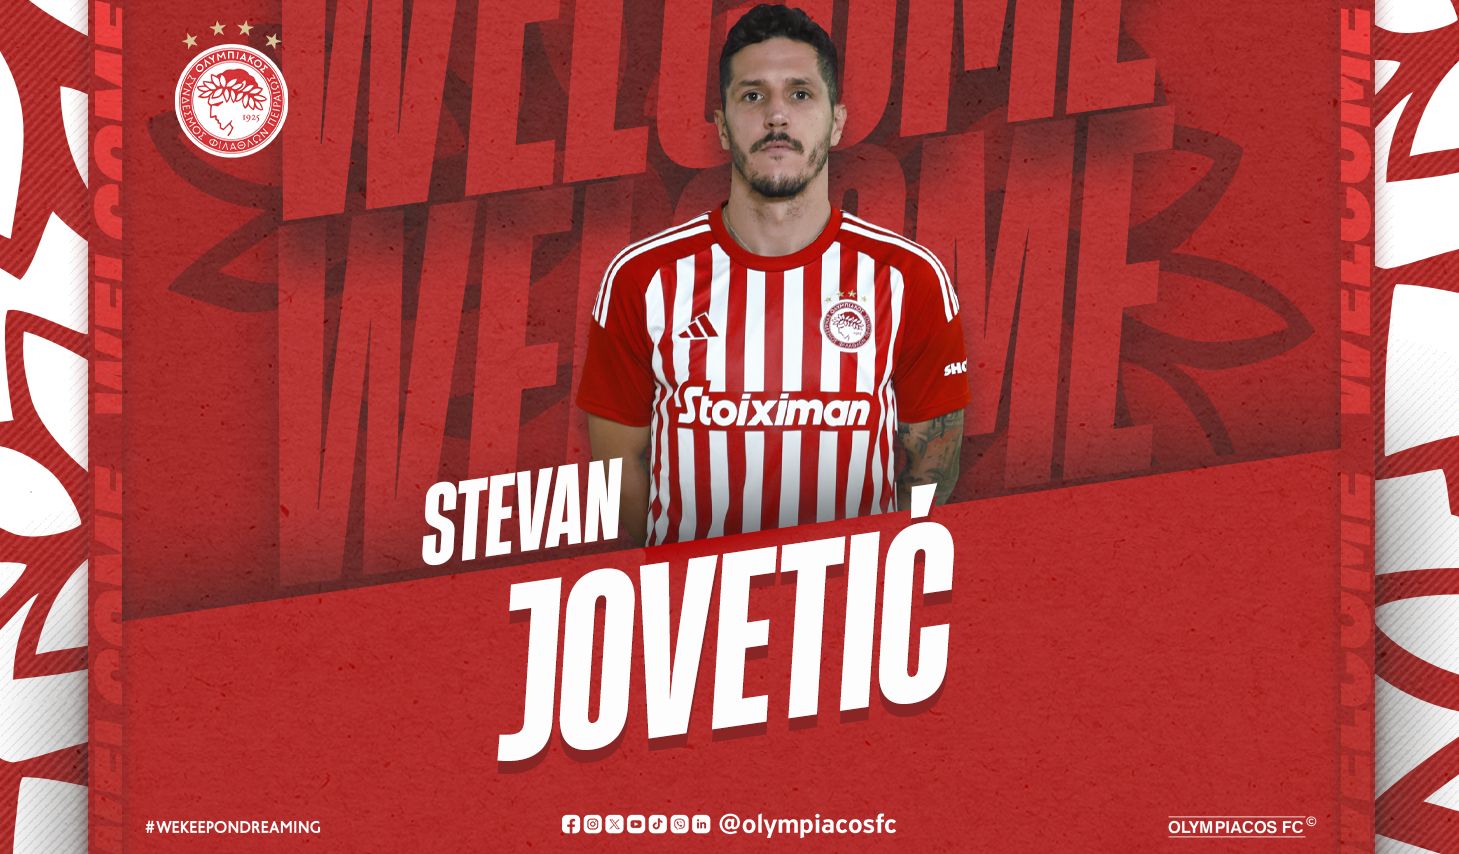 Stevan Jovetić rejoint l’Olympiacos